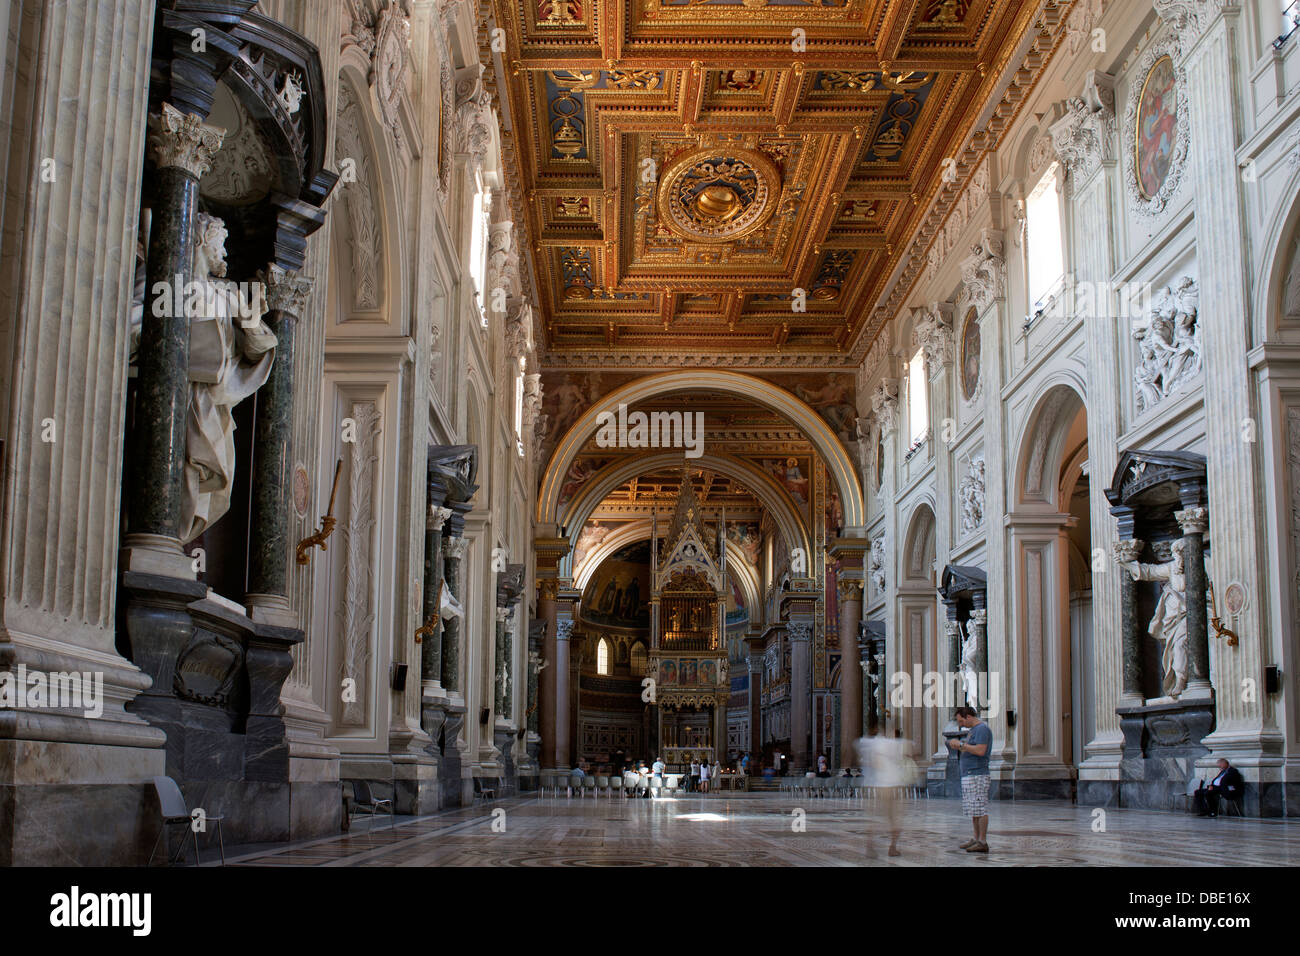 Nave inside the Basilica of St. John Lateran. Baroque Art, s. XVII, by the architect Francesco Borromini Stock Photo